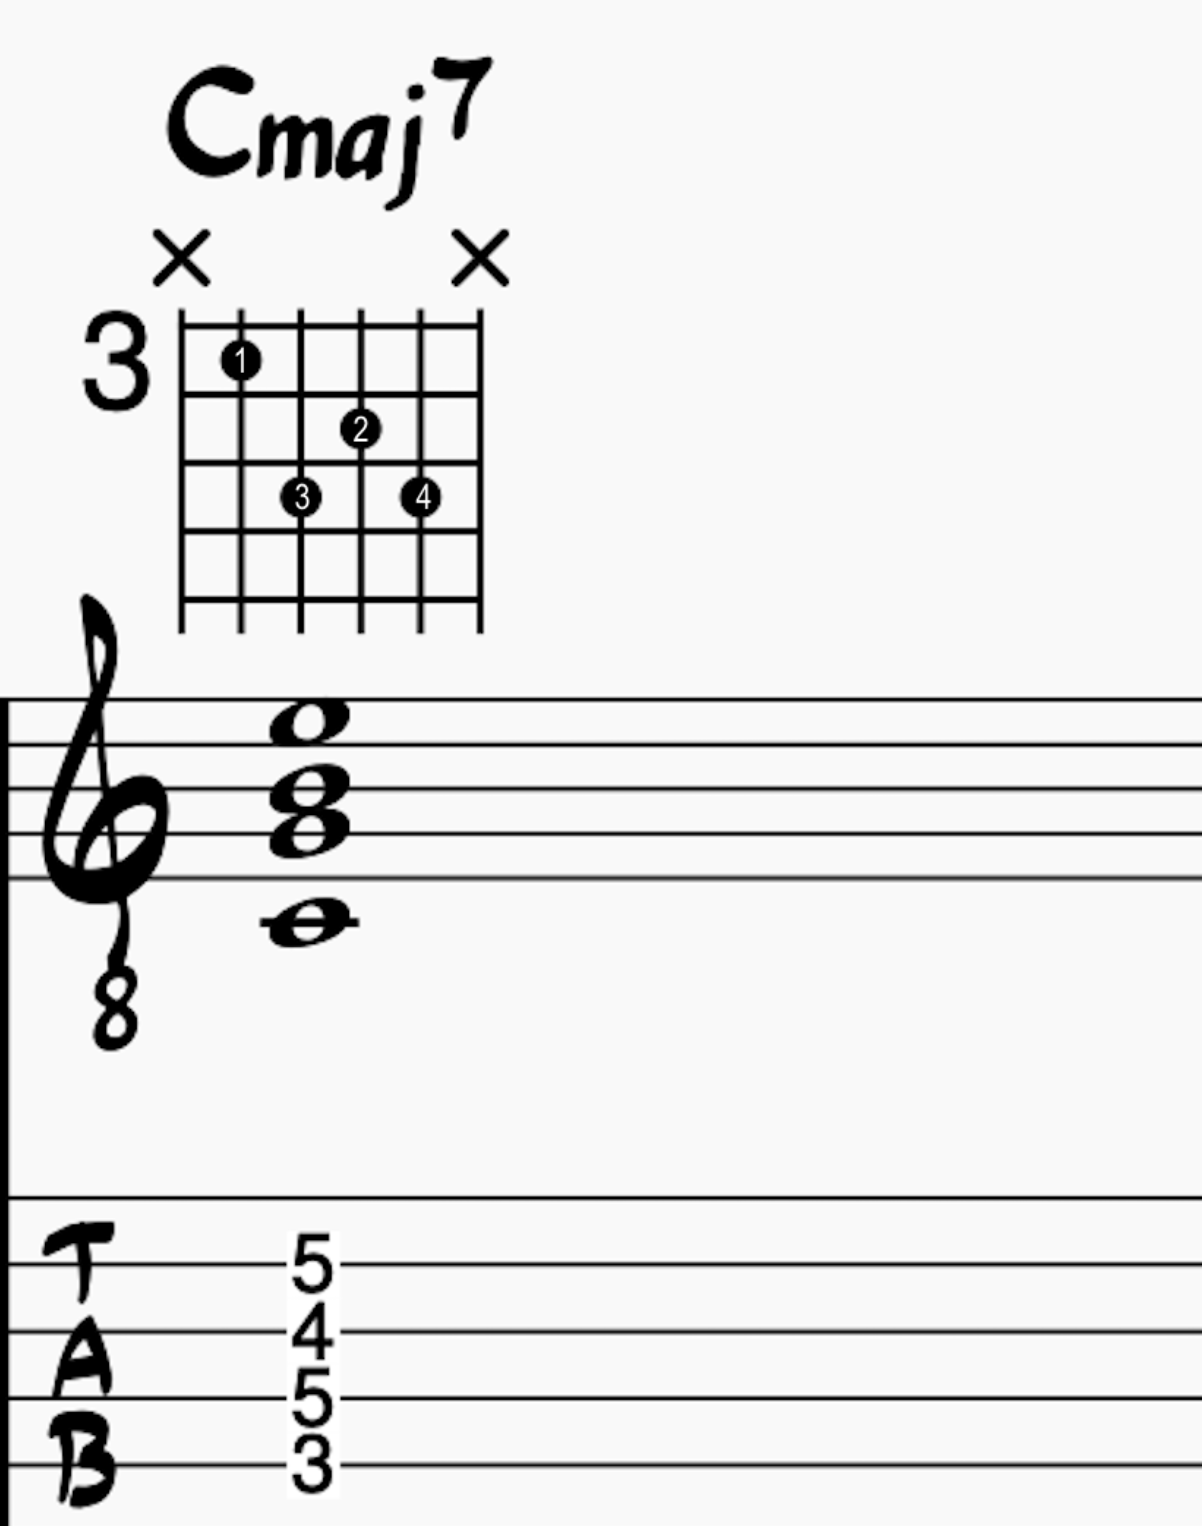 A-D-G-B string Cmaj7 guitar chord root position